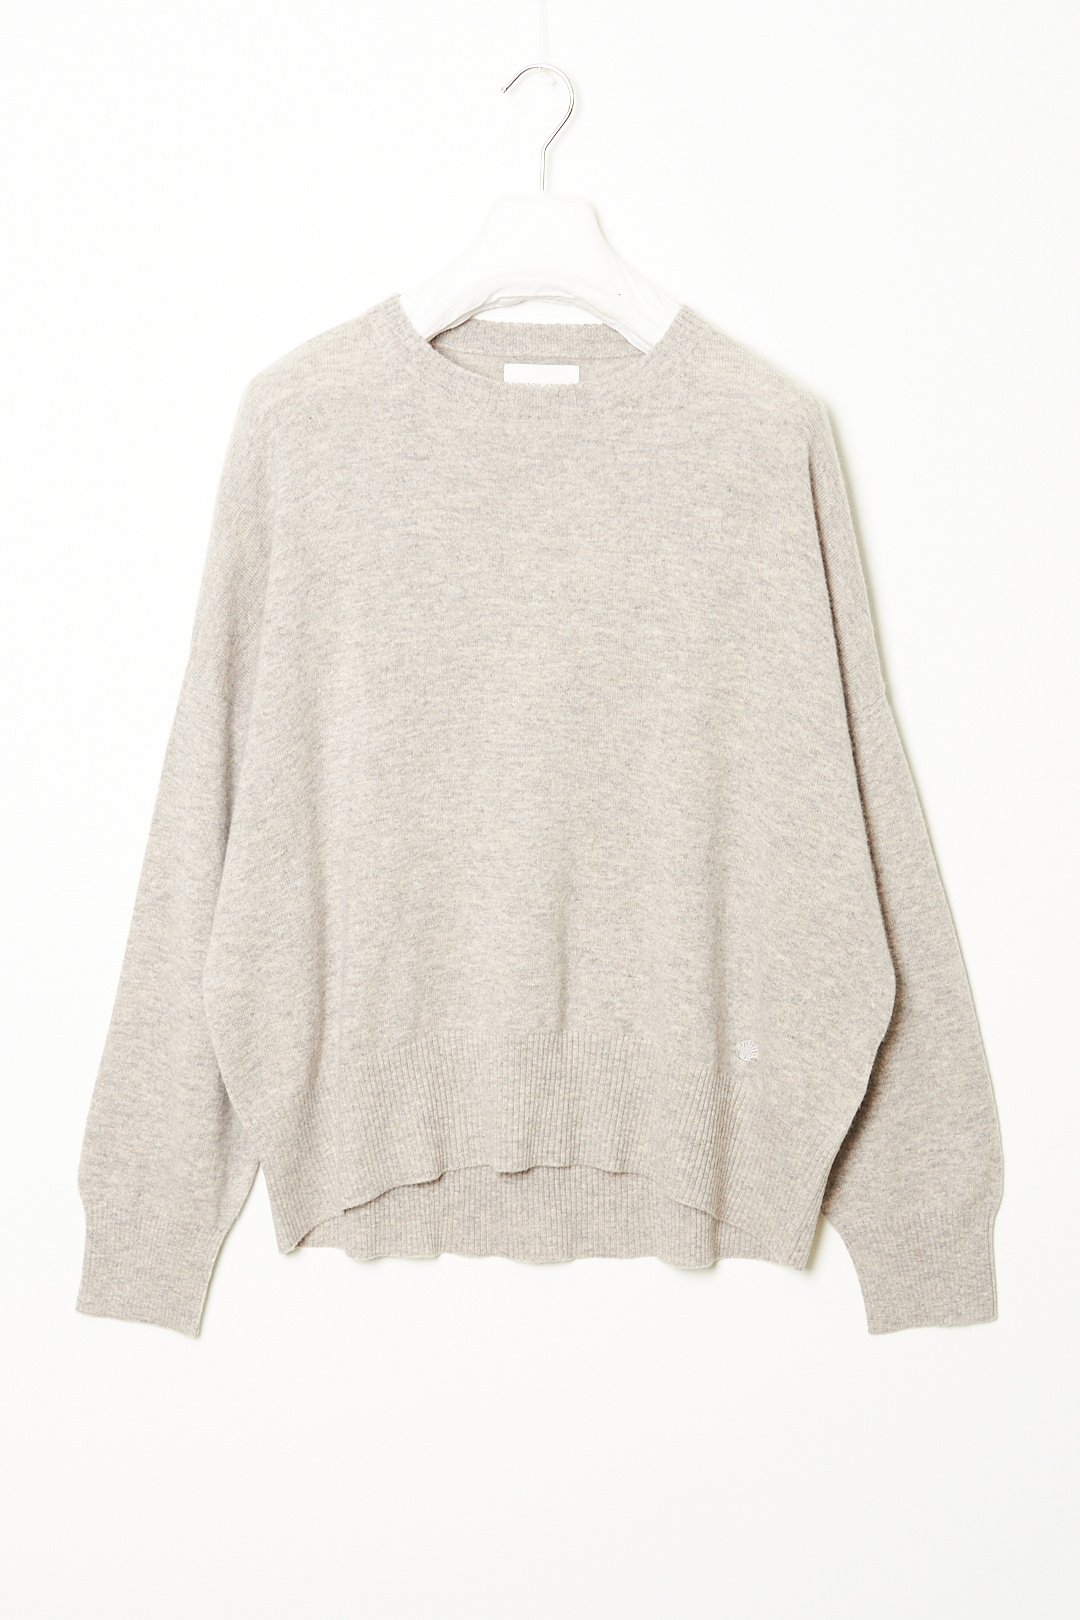 Loulou studio - Anaa cashmere sweater